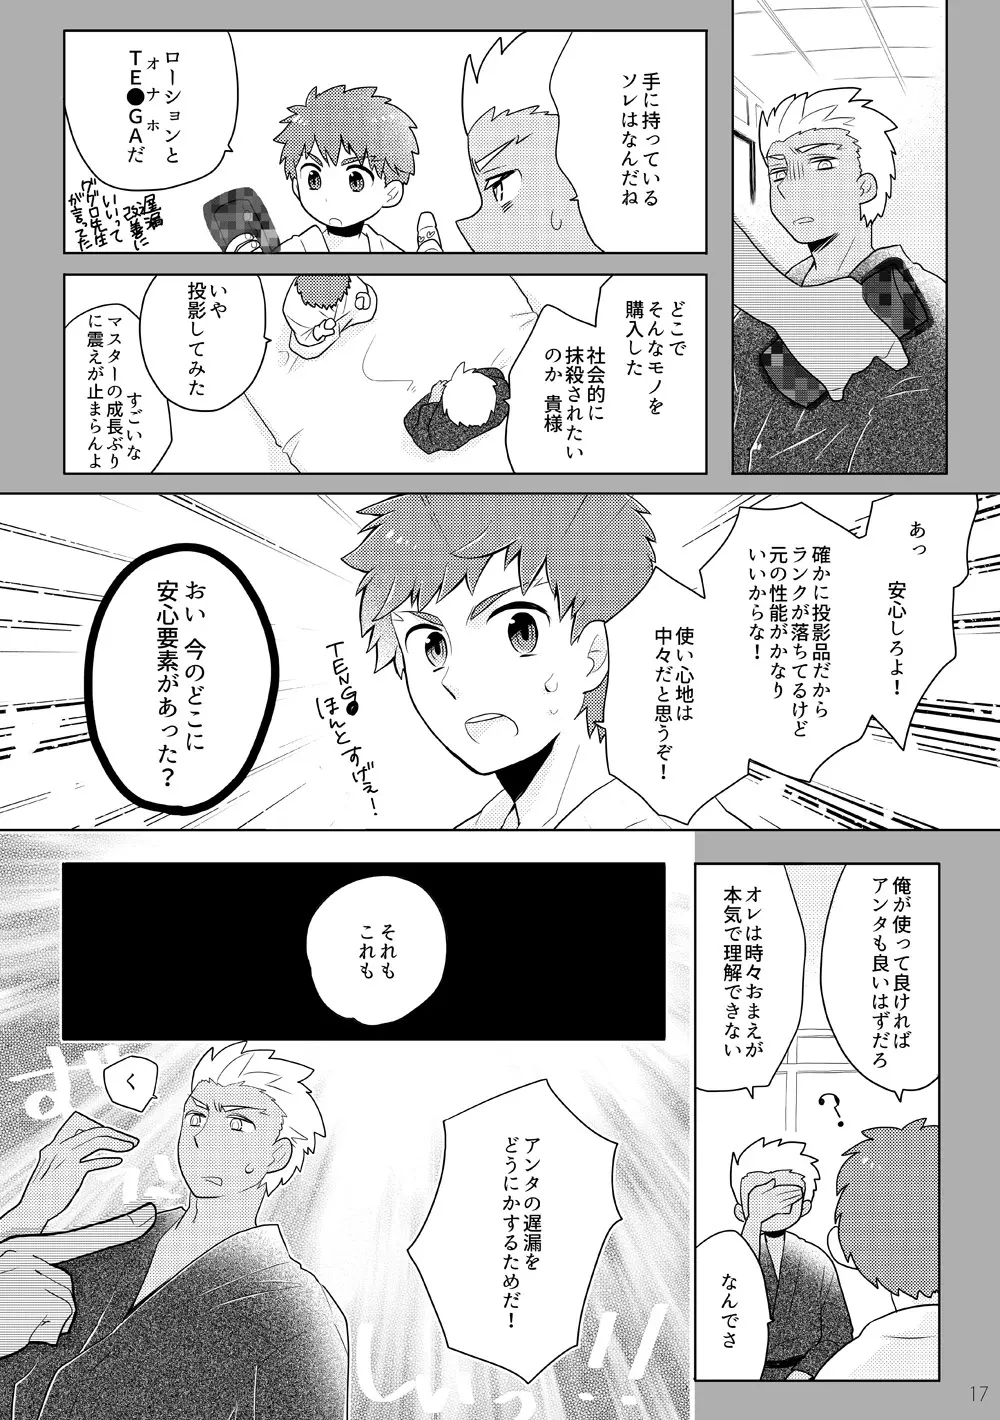 弓士本 - page79